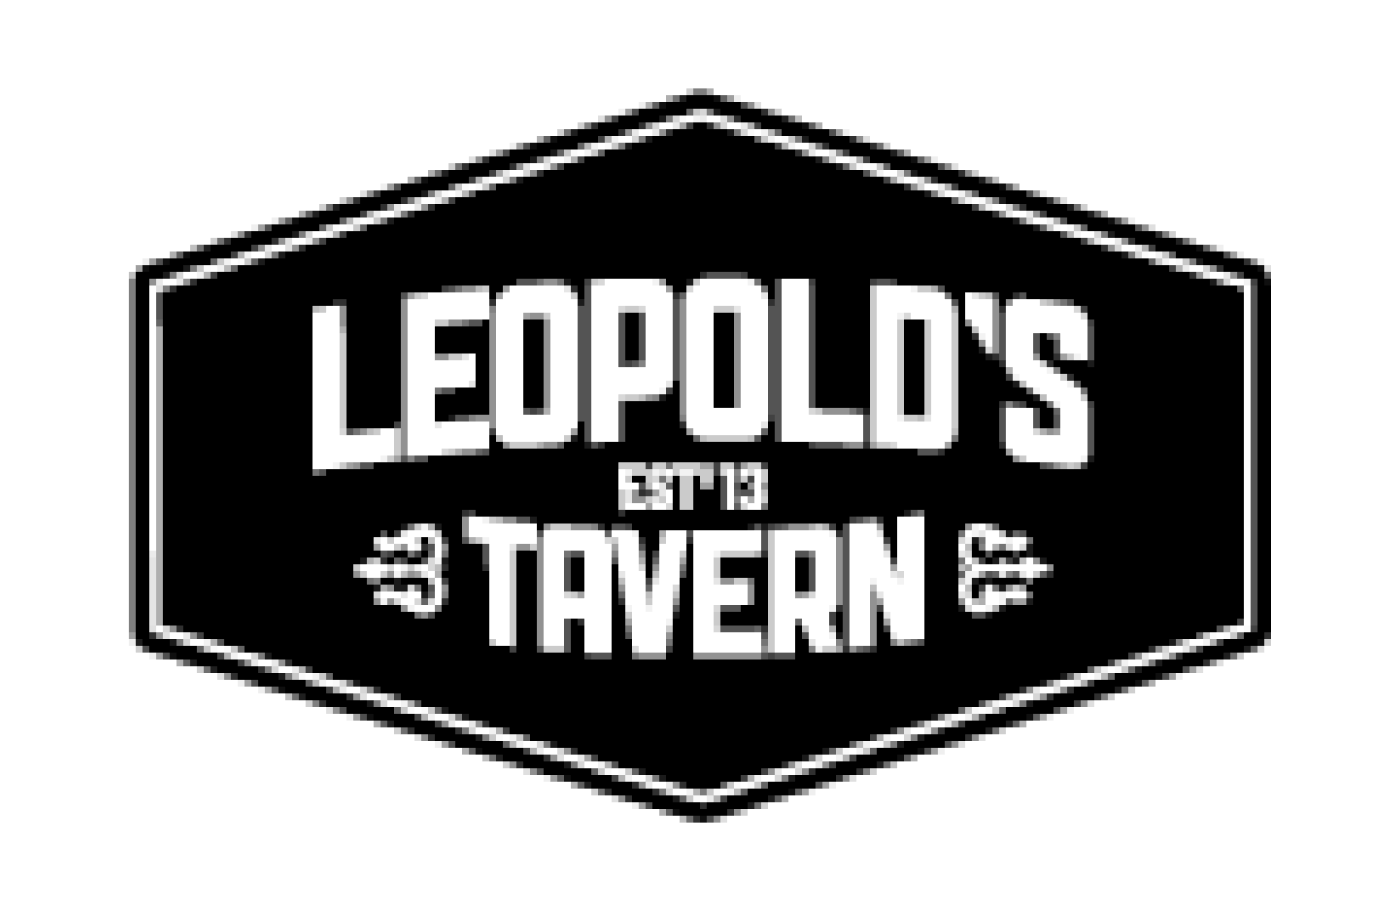 Leopold's Tavern Logo